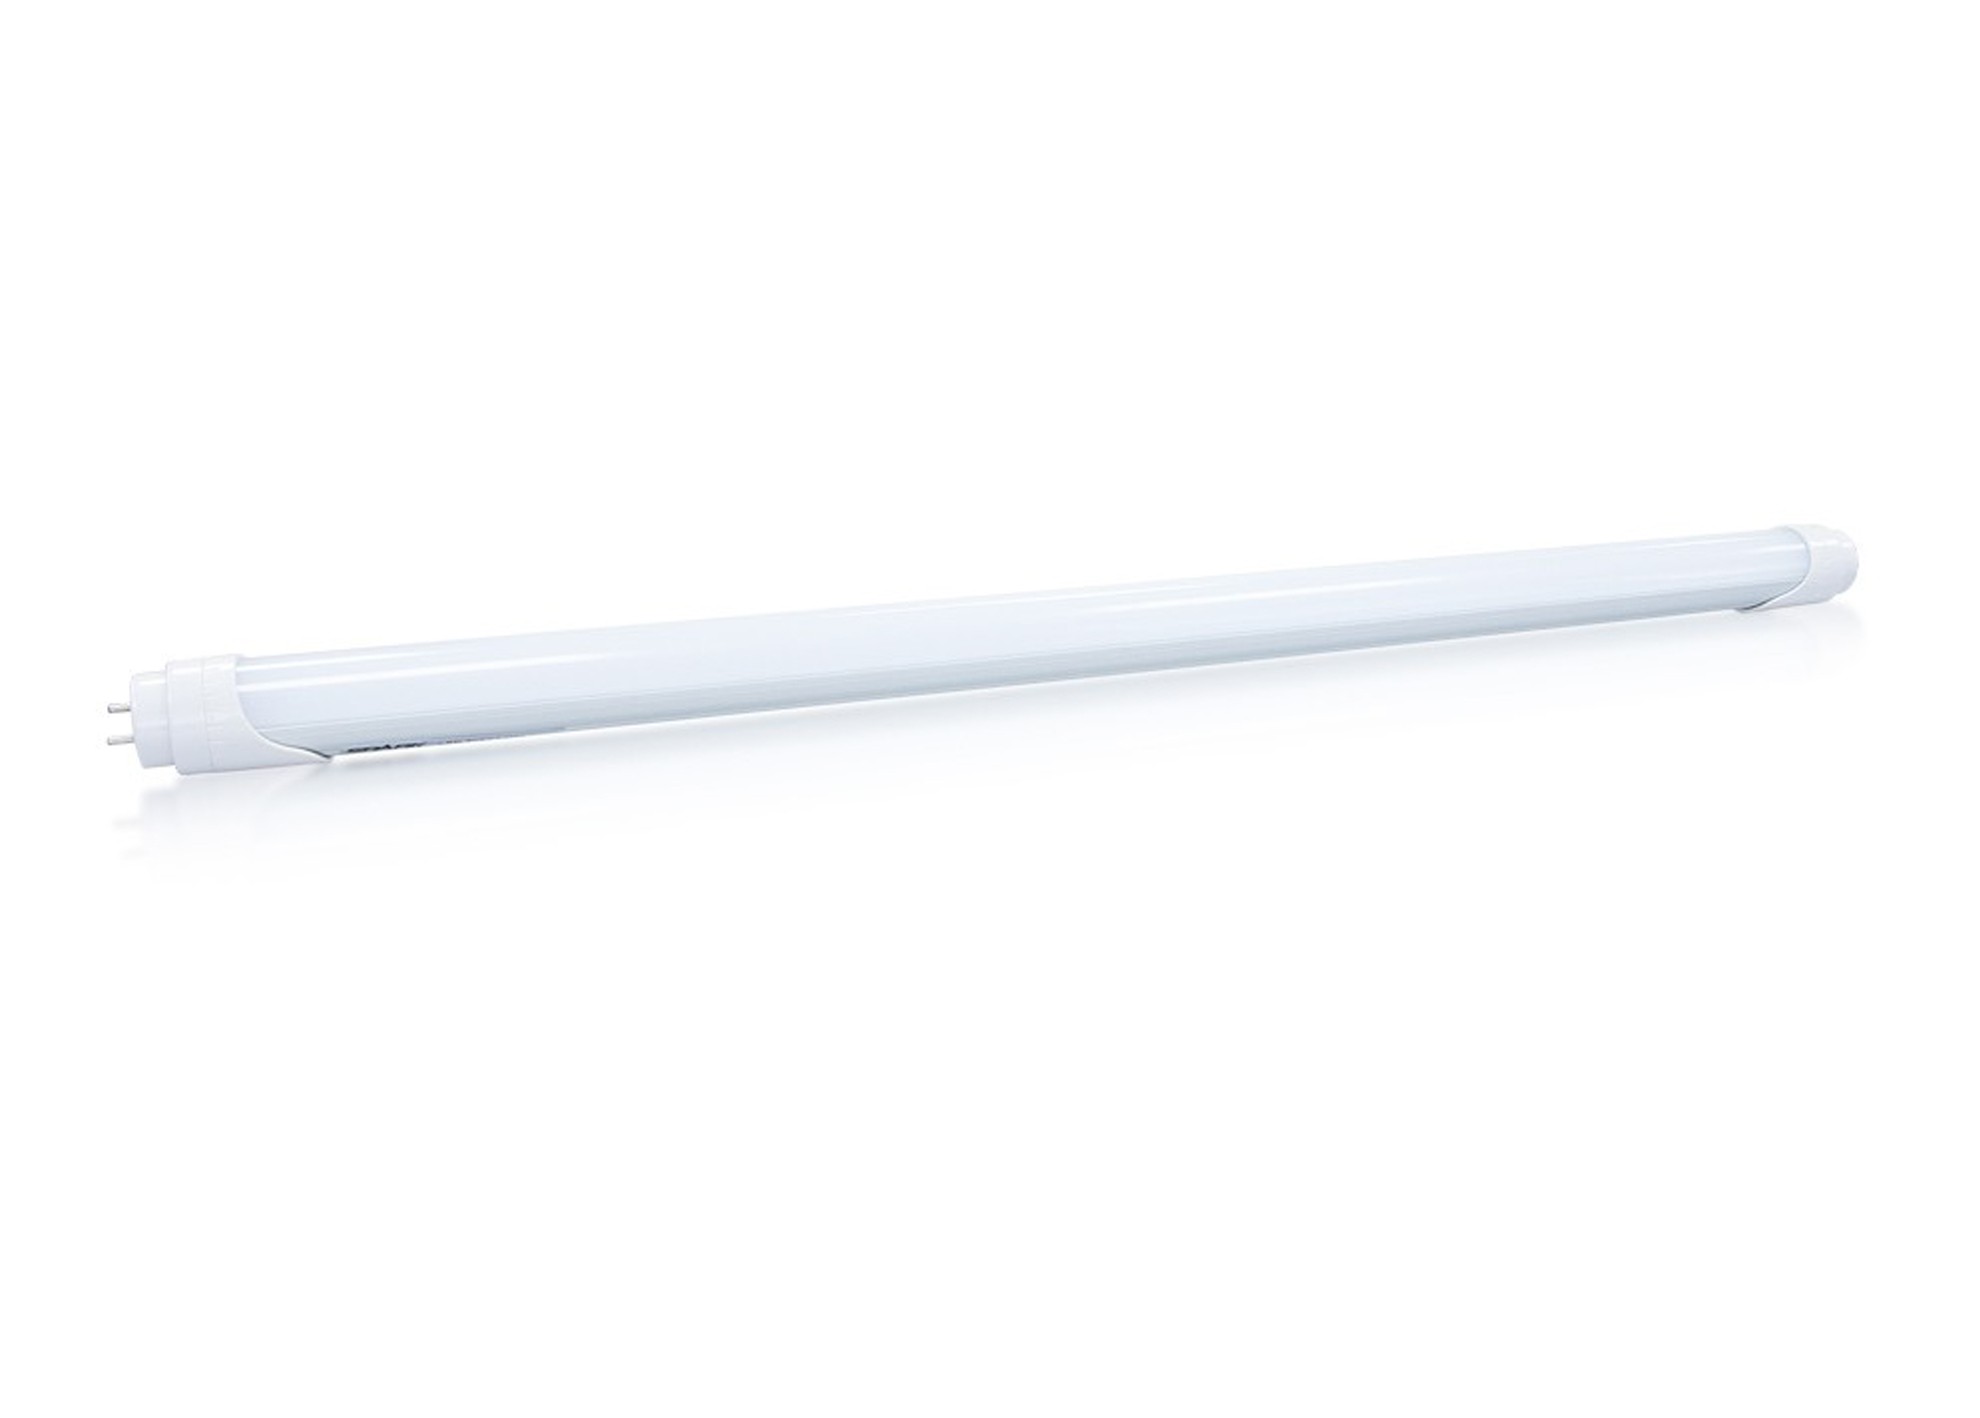 LED trubica T8 60cm, 7W, studená biela - 6000K, 11